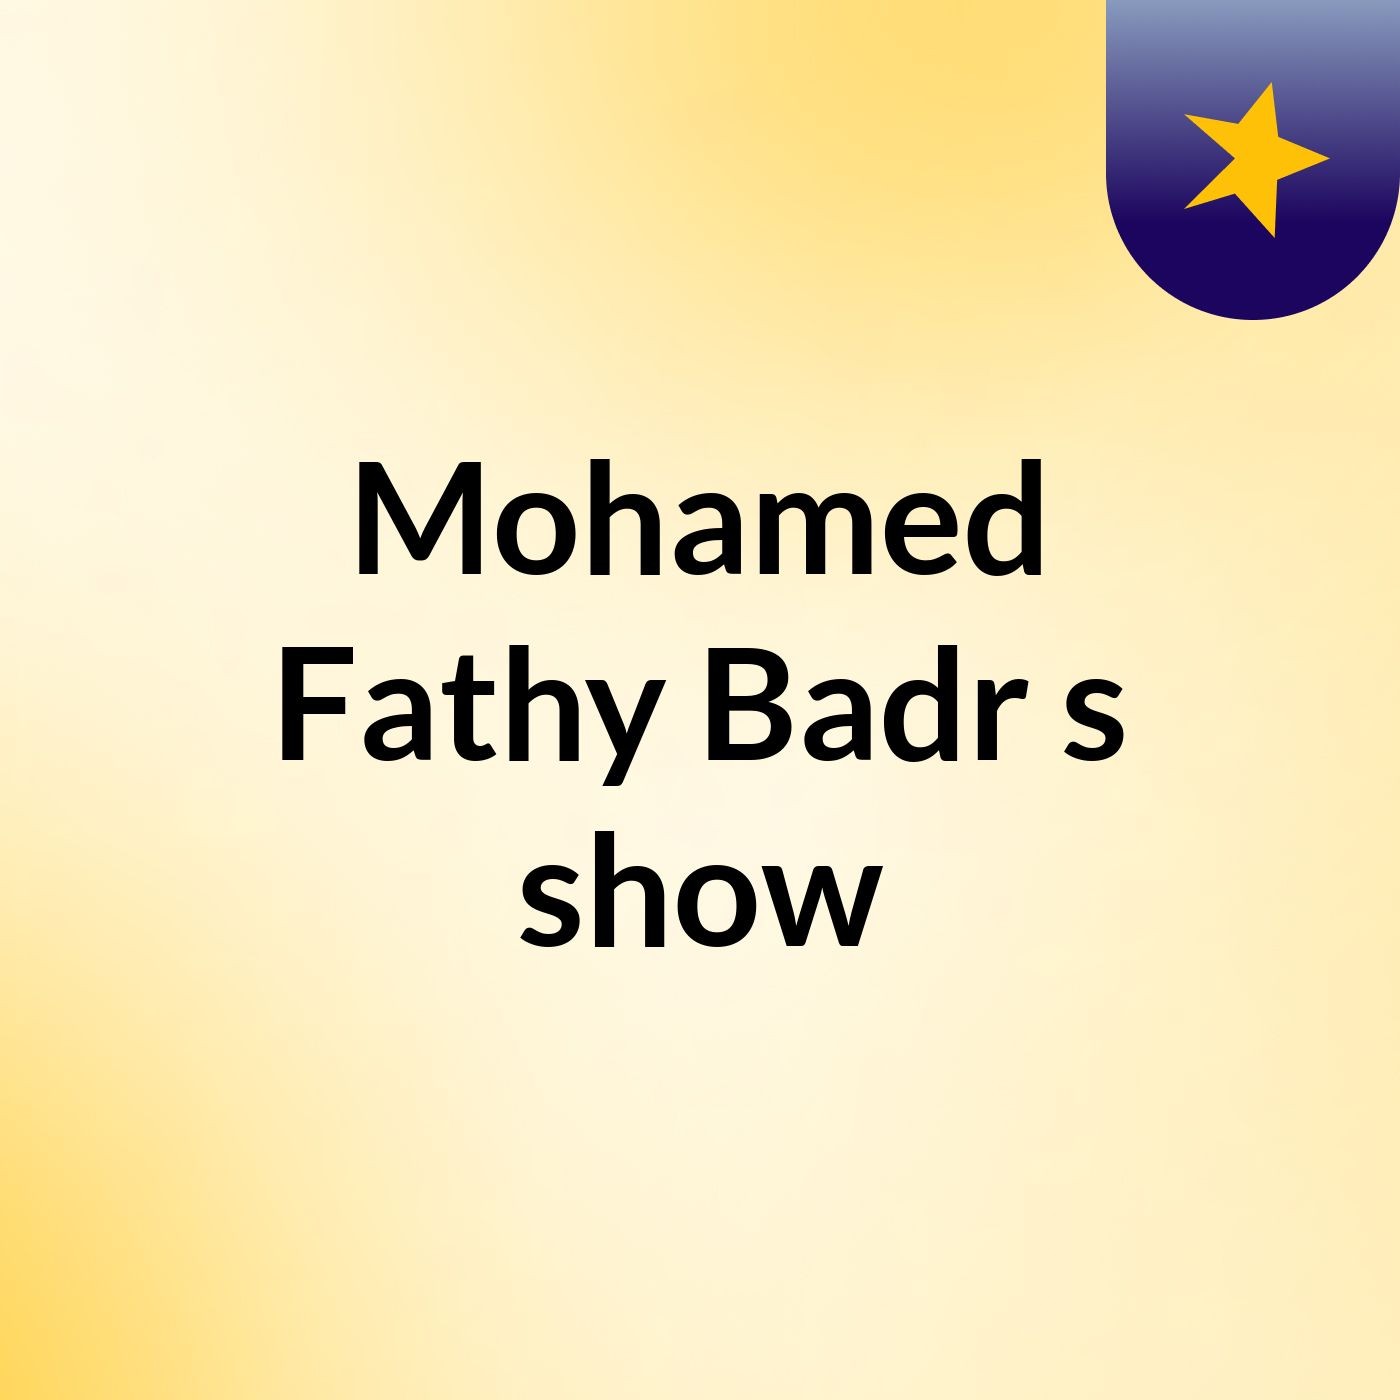 Mohamed Fathy Badr's show